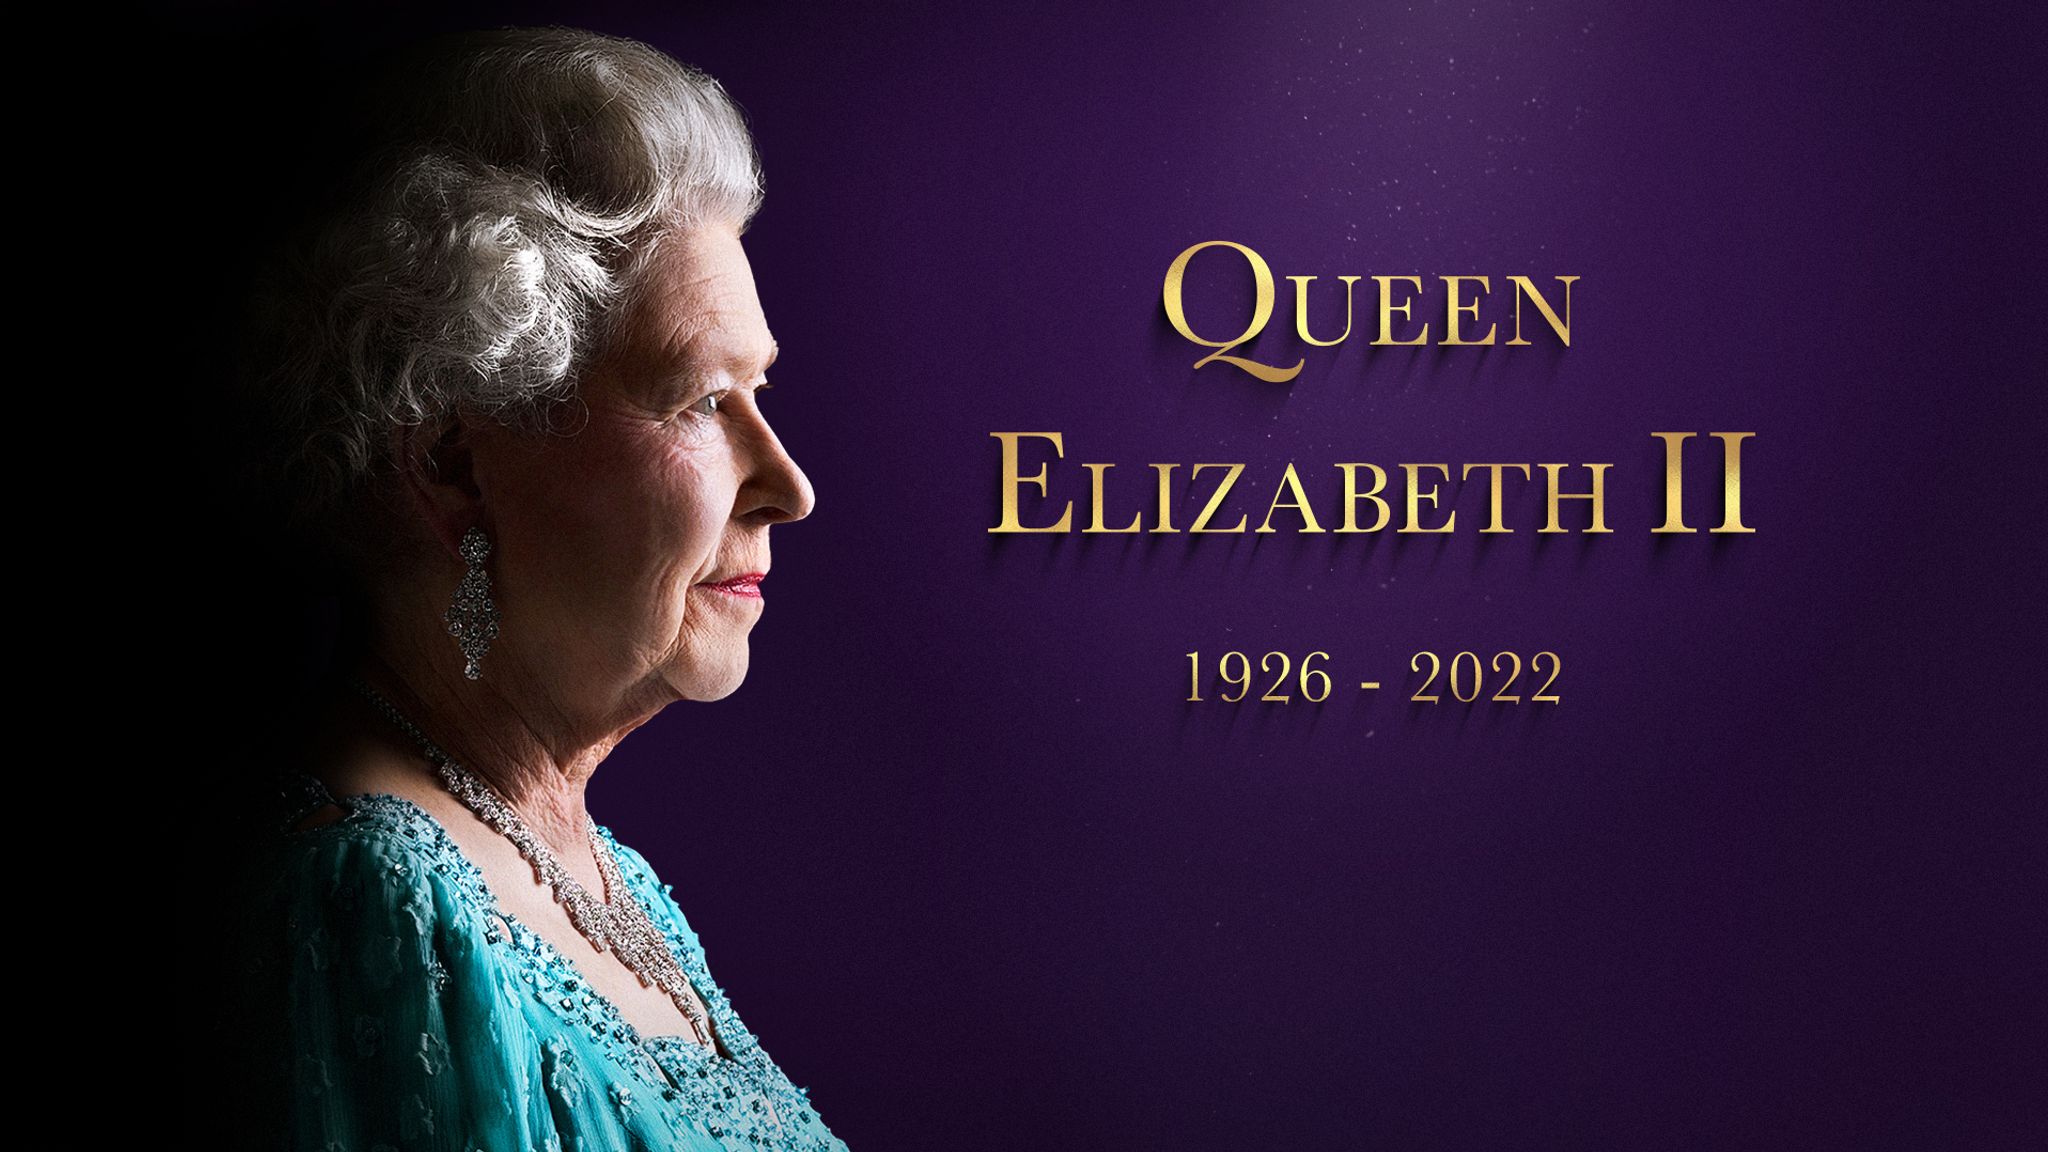 Queen Elizabeth II has died aged Buckingham Palace announces